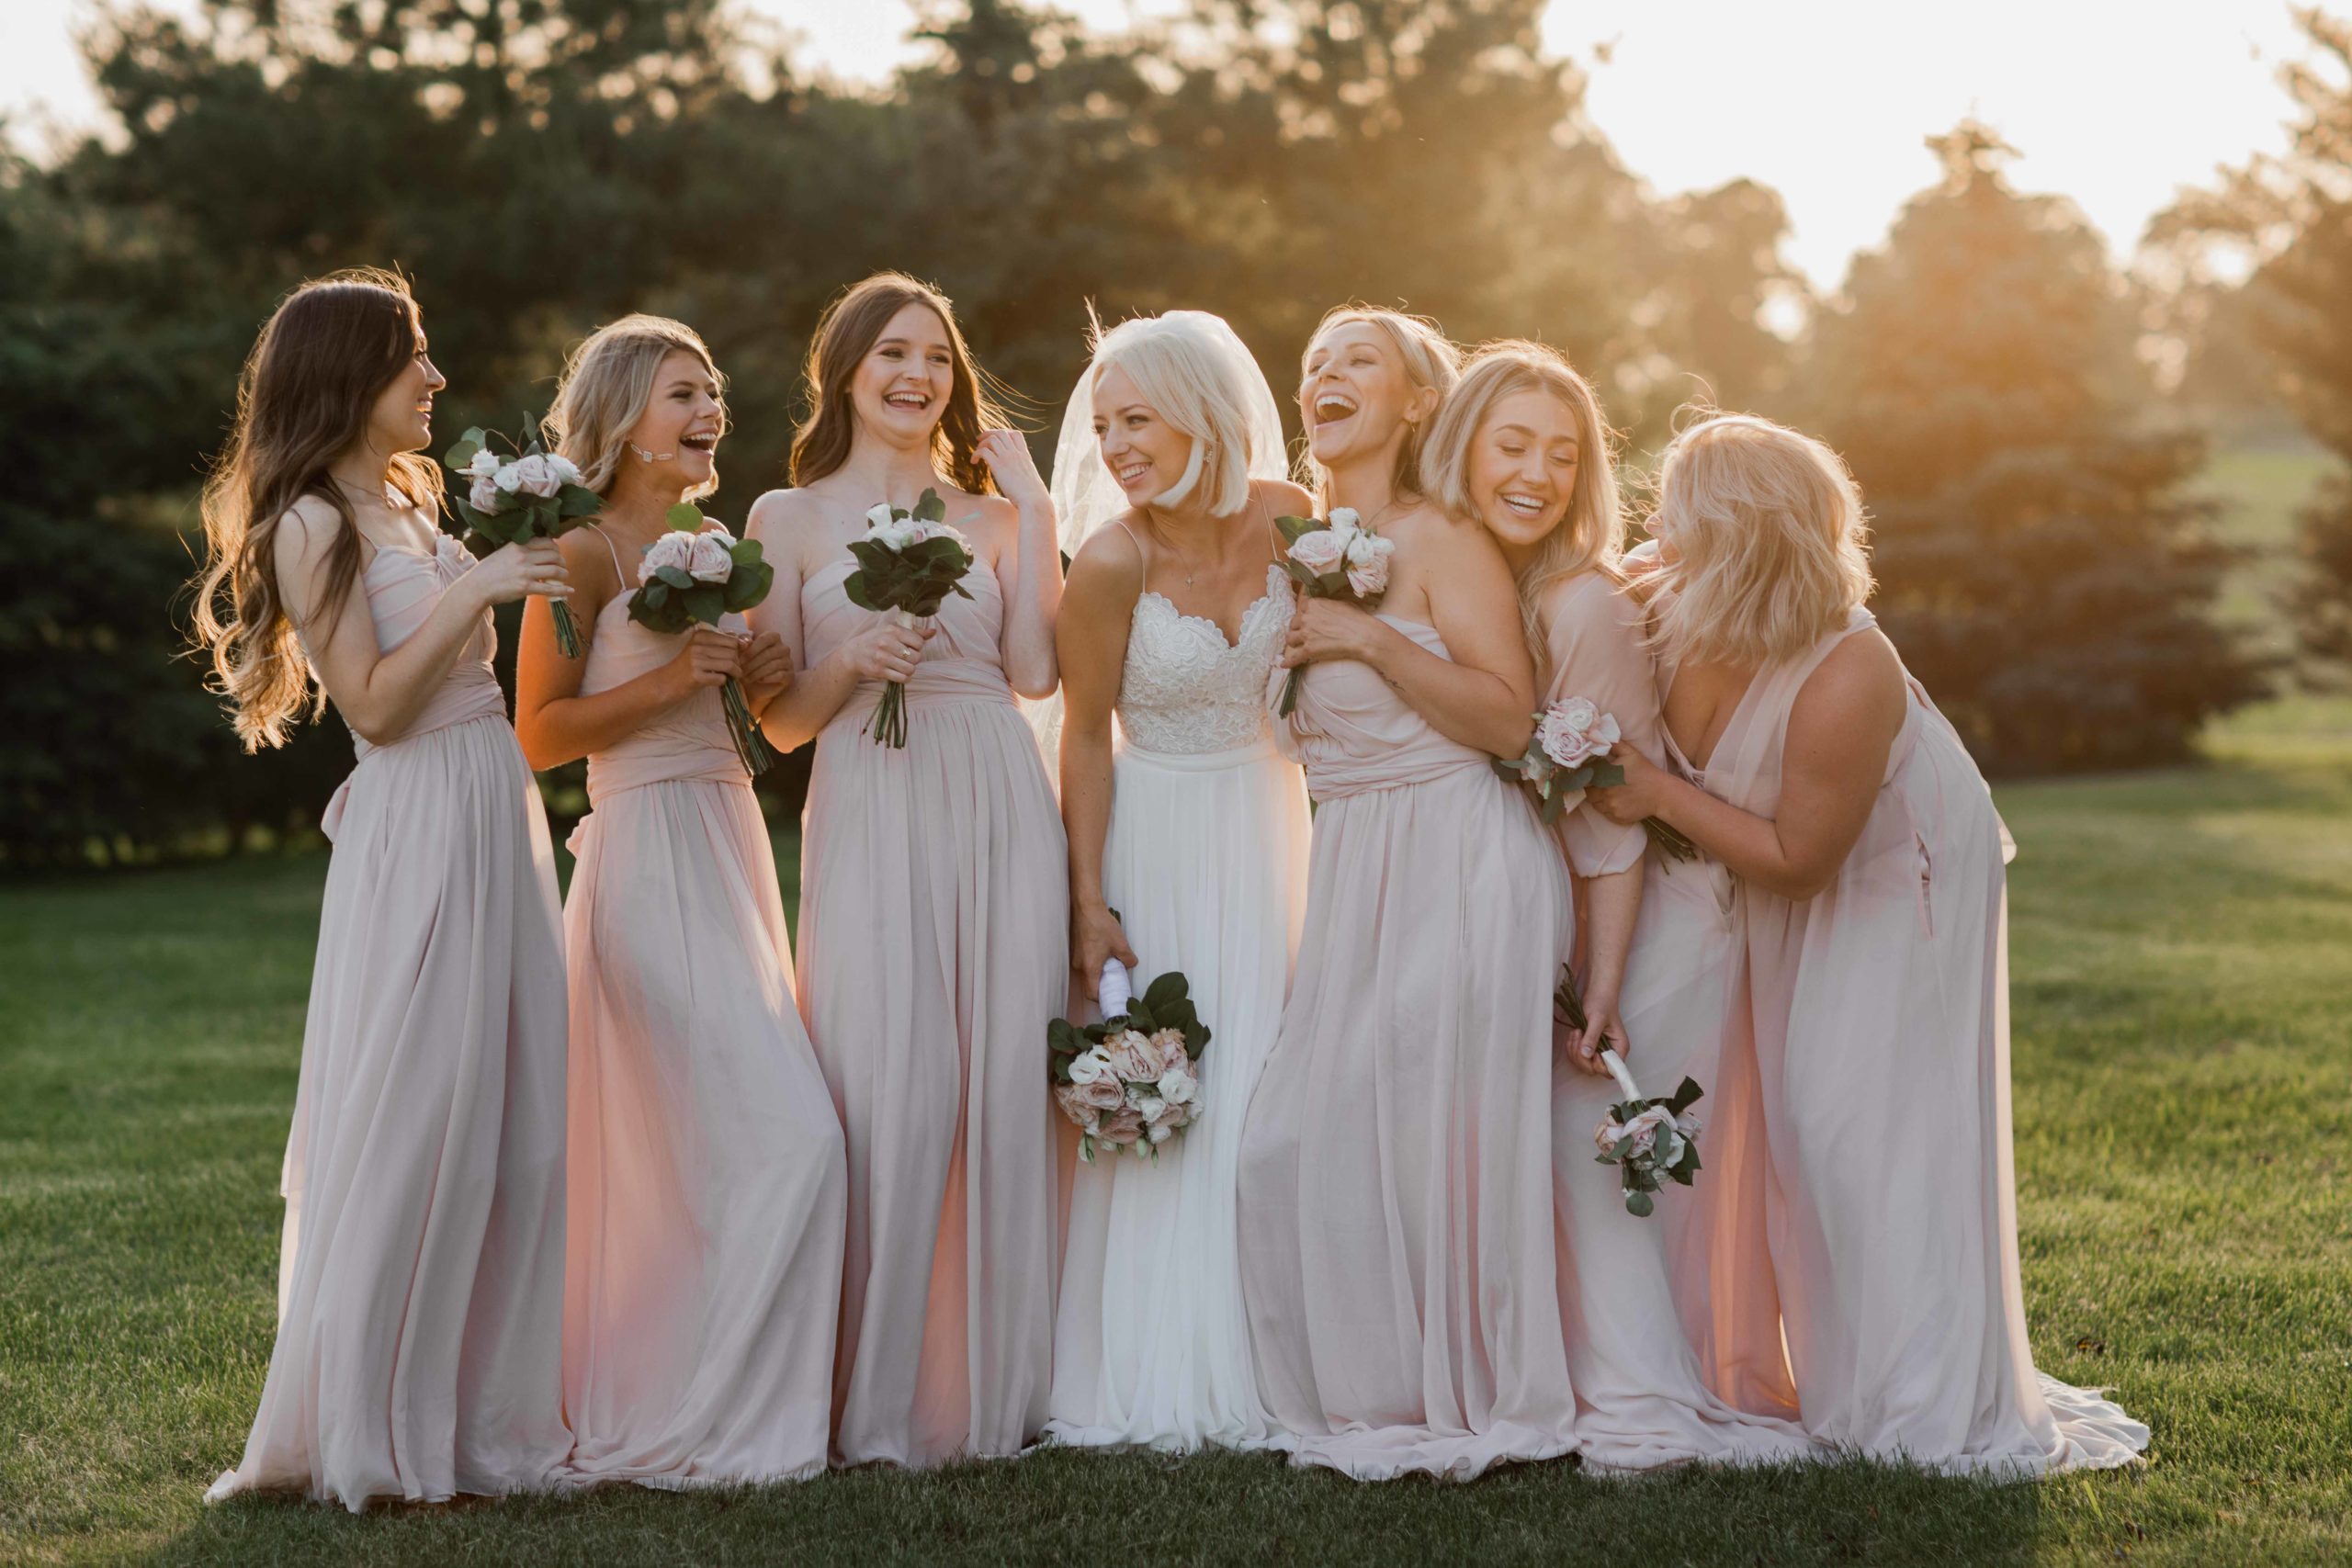 Bridesmaids portraits fun by Geneva, Illinois Wedding Photographer